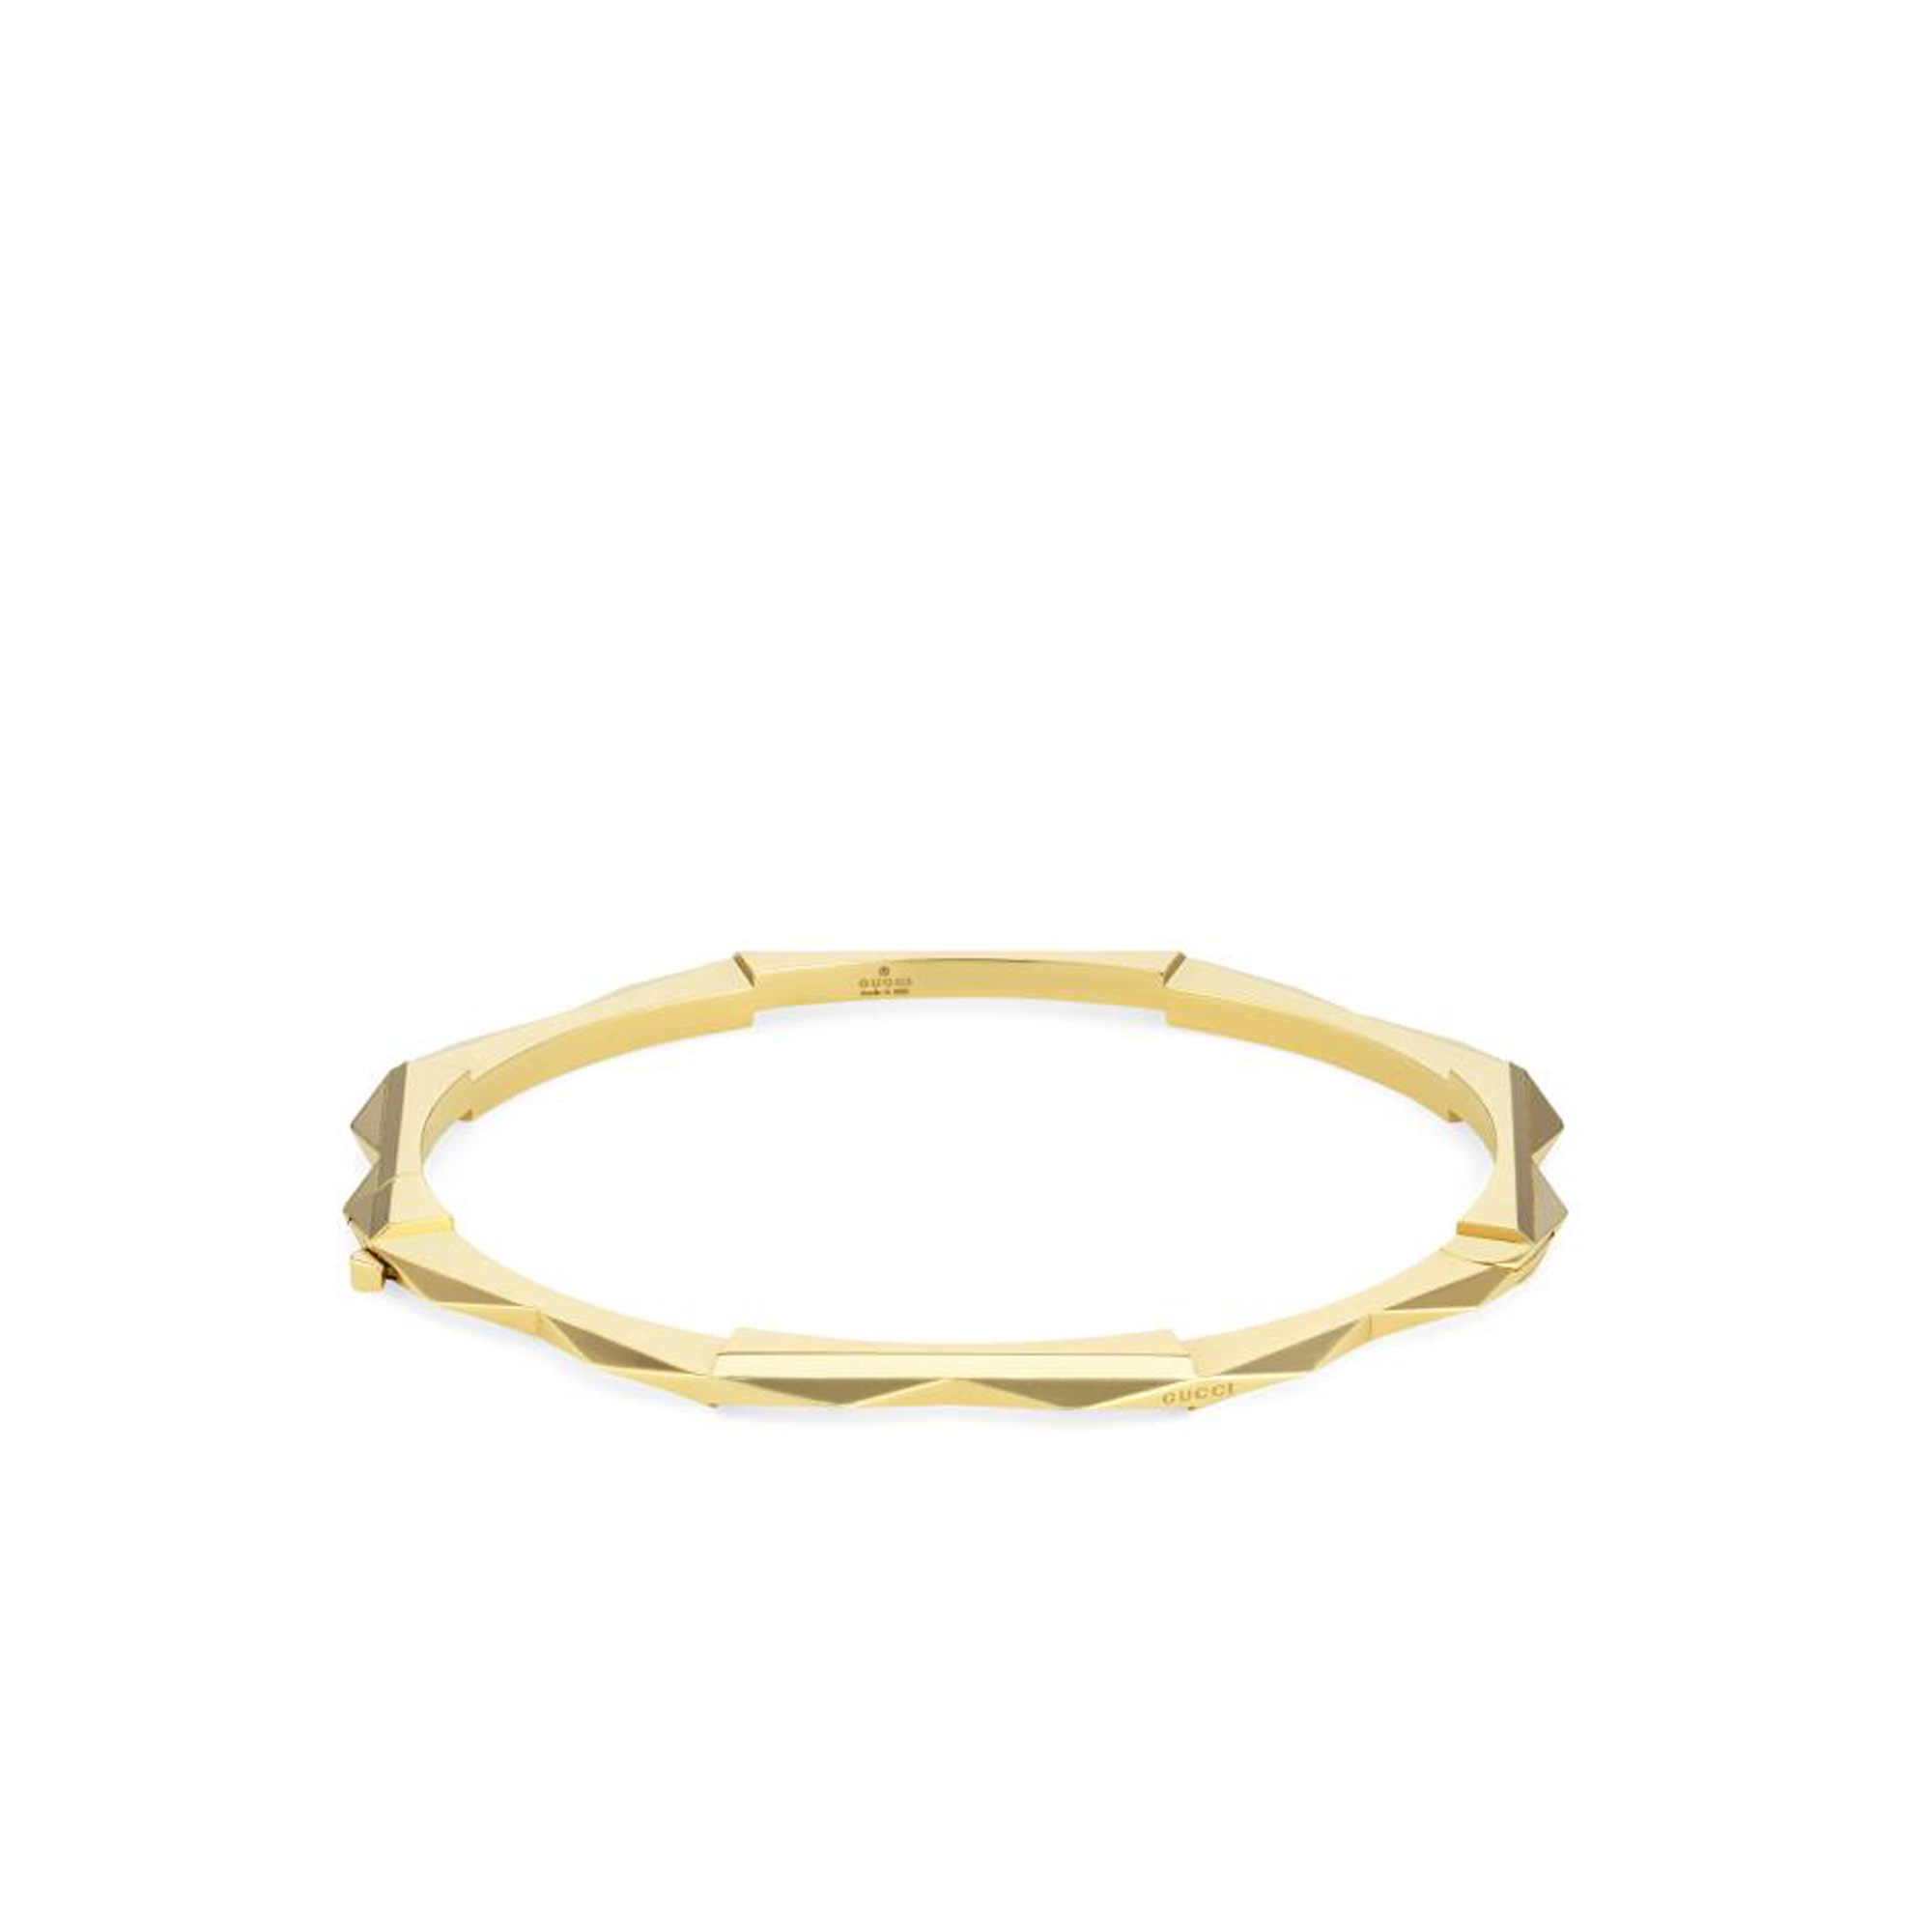 Bracciale Gucci Link to Love con borchie bracelet sconto discount